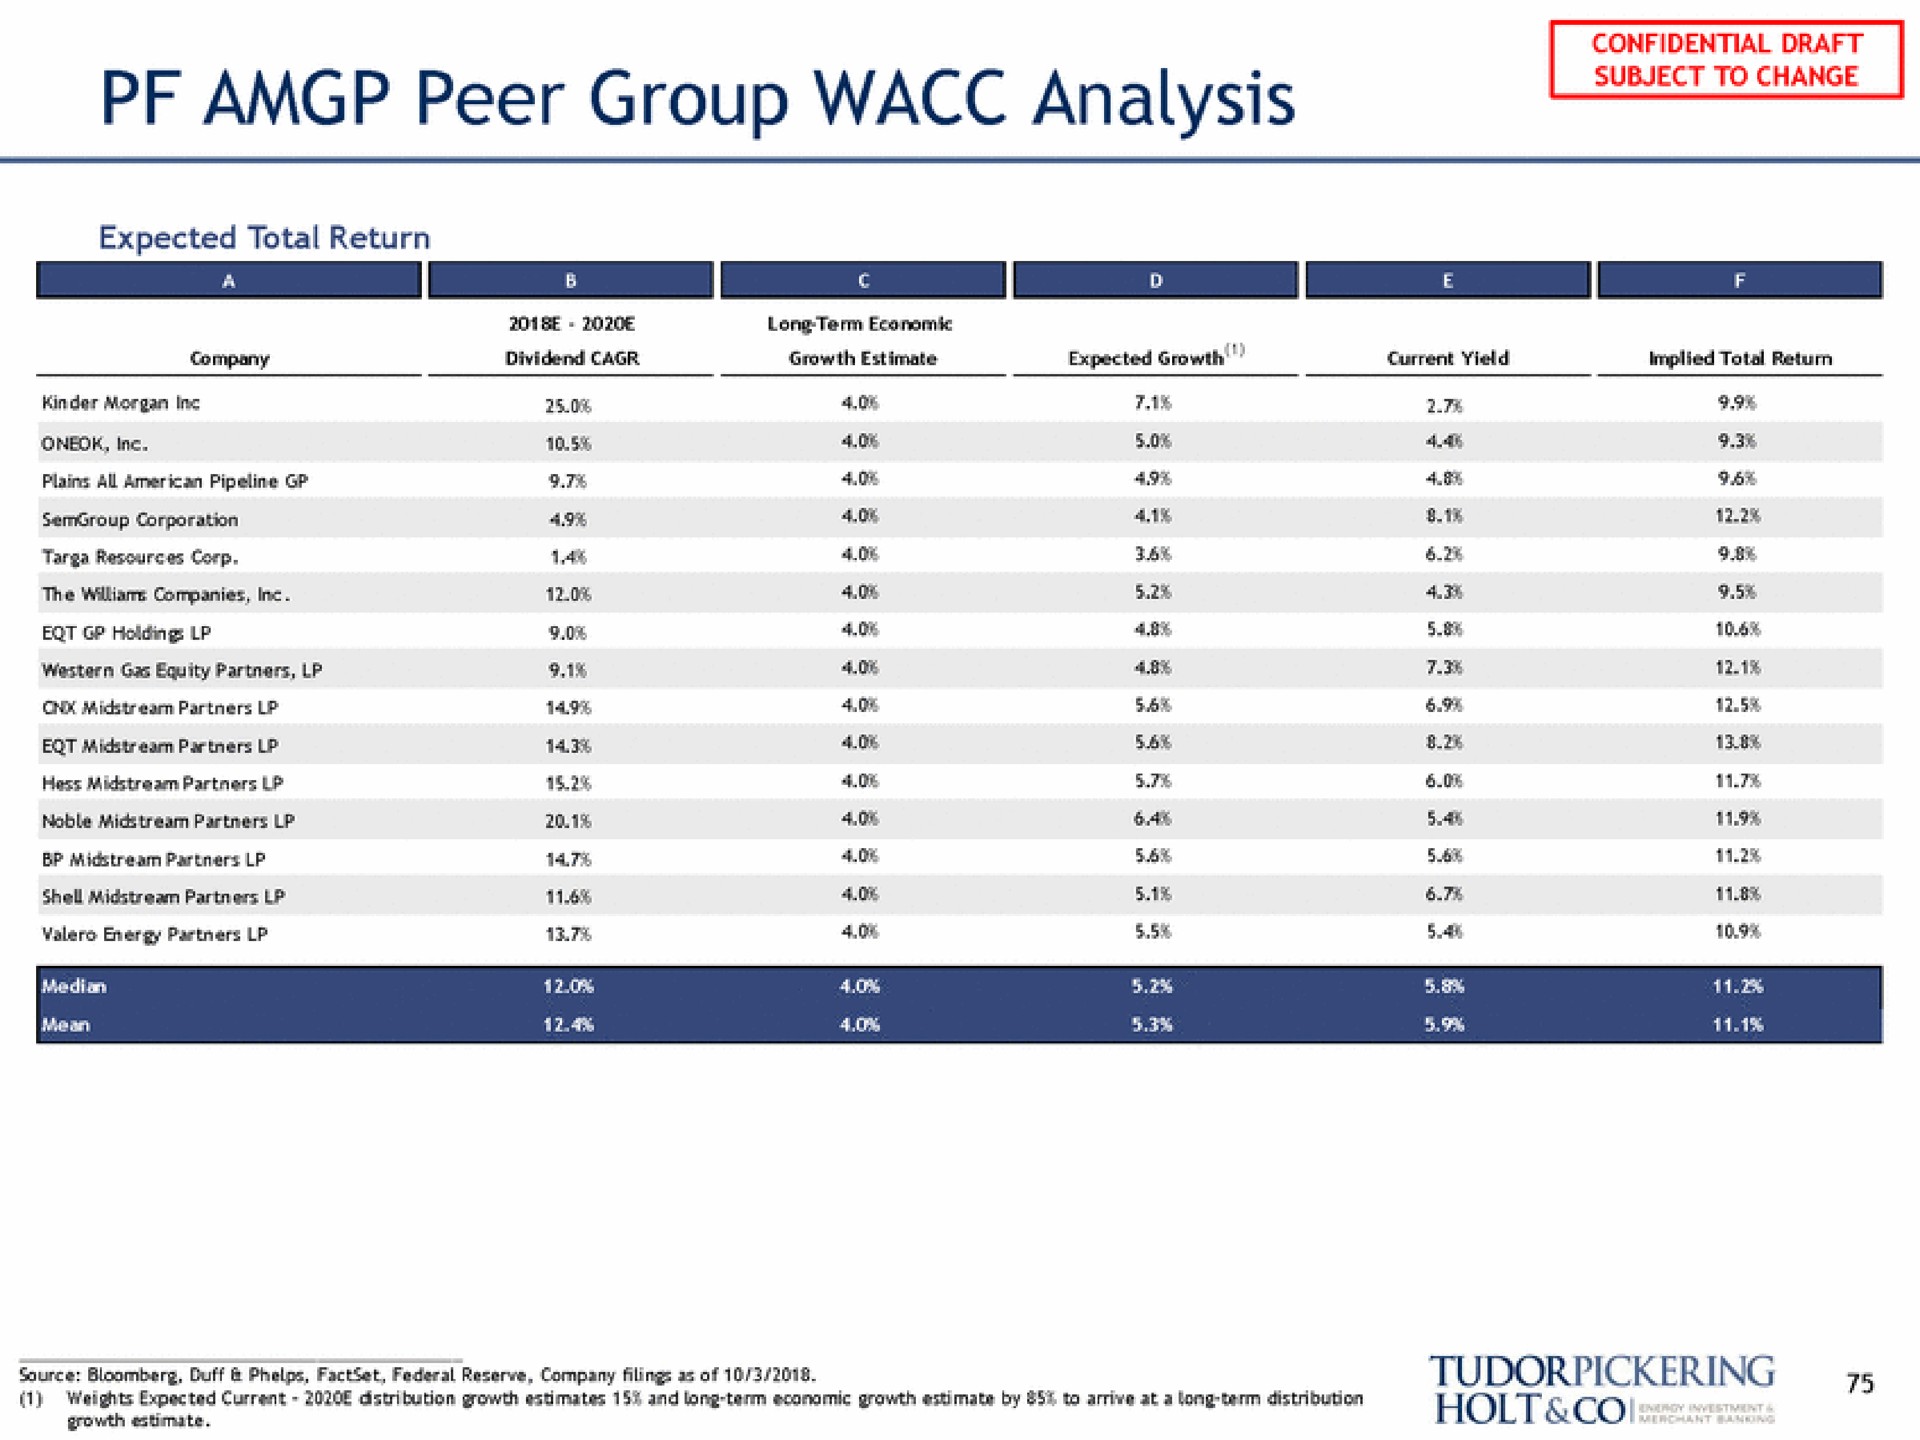 peer group analysis a holt | Tudor, Pickering, Holt & Co